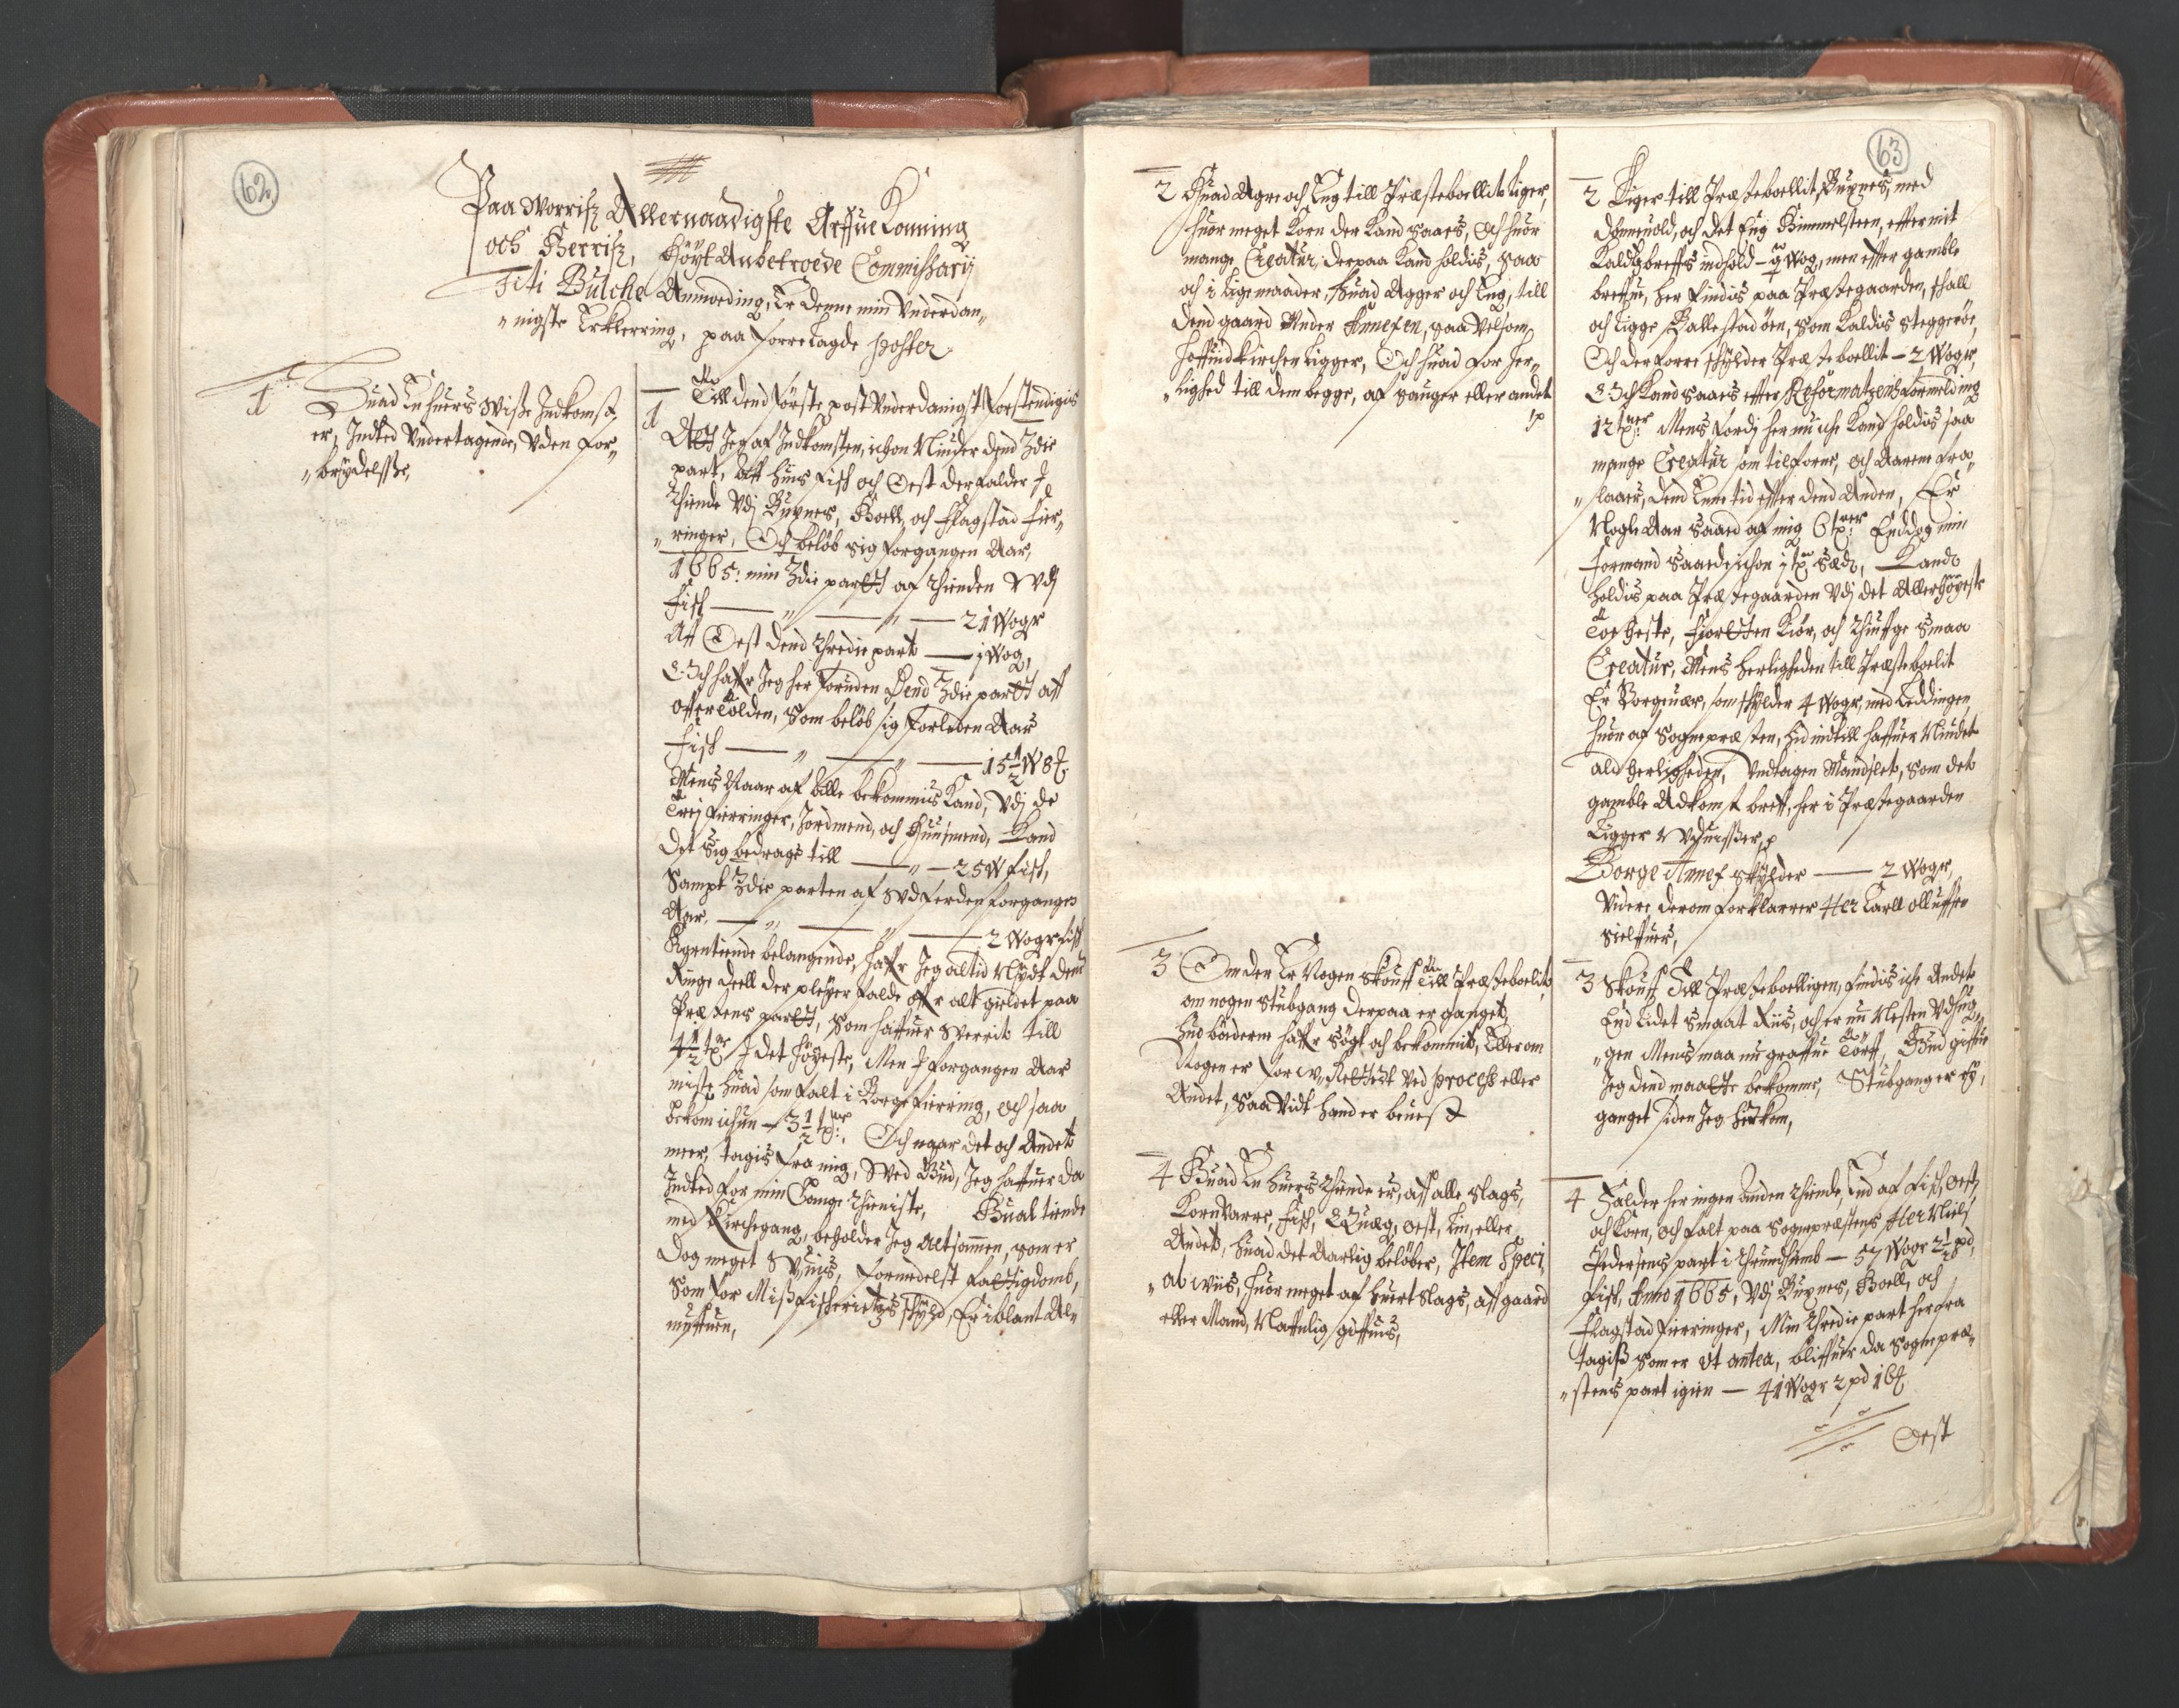 RA, Vicar's Census 1664-1666, no. 36: Lofoten and Vesterålen deanery, Senja deanery and Troms deanery, 1664-1666, p. 62-63